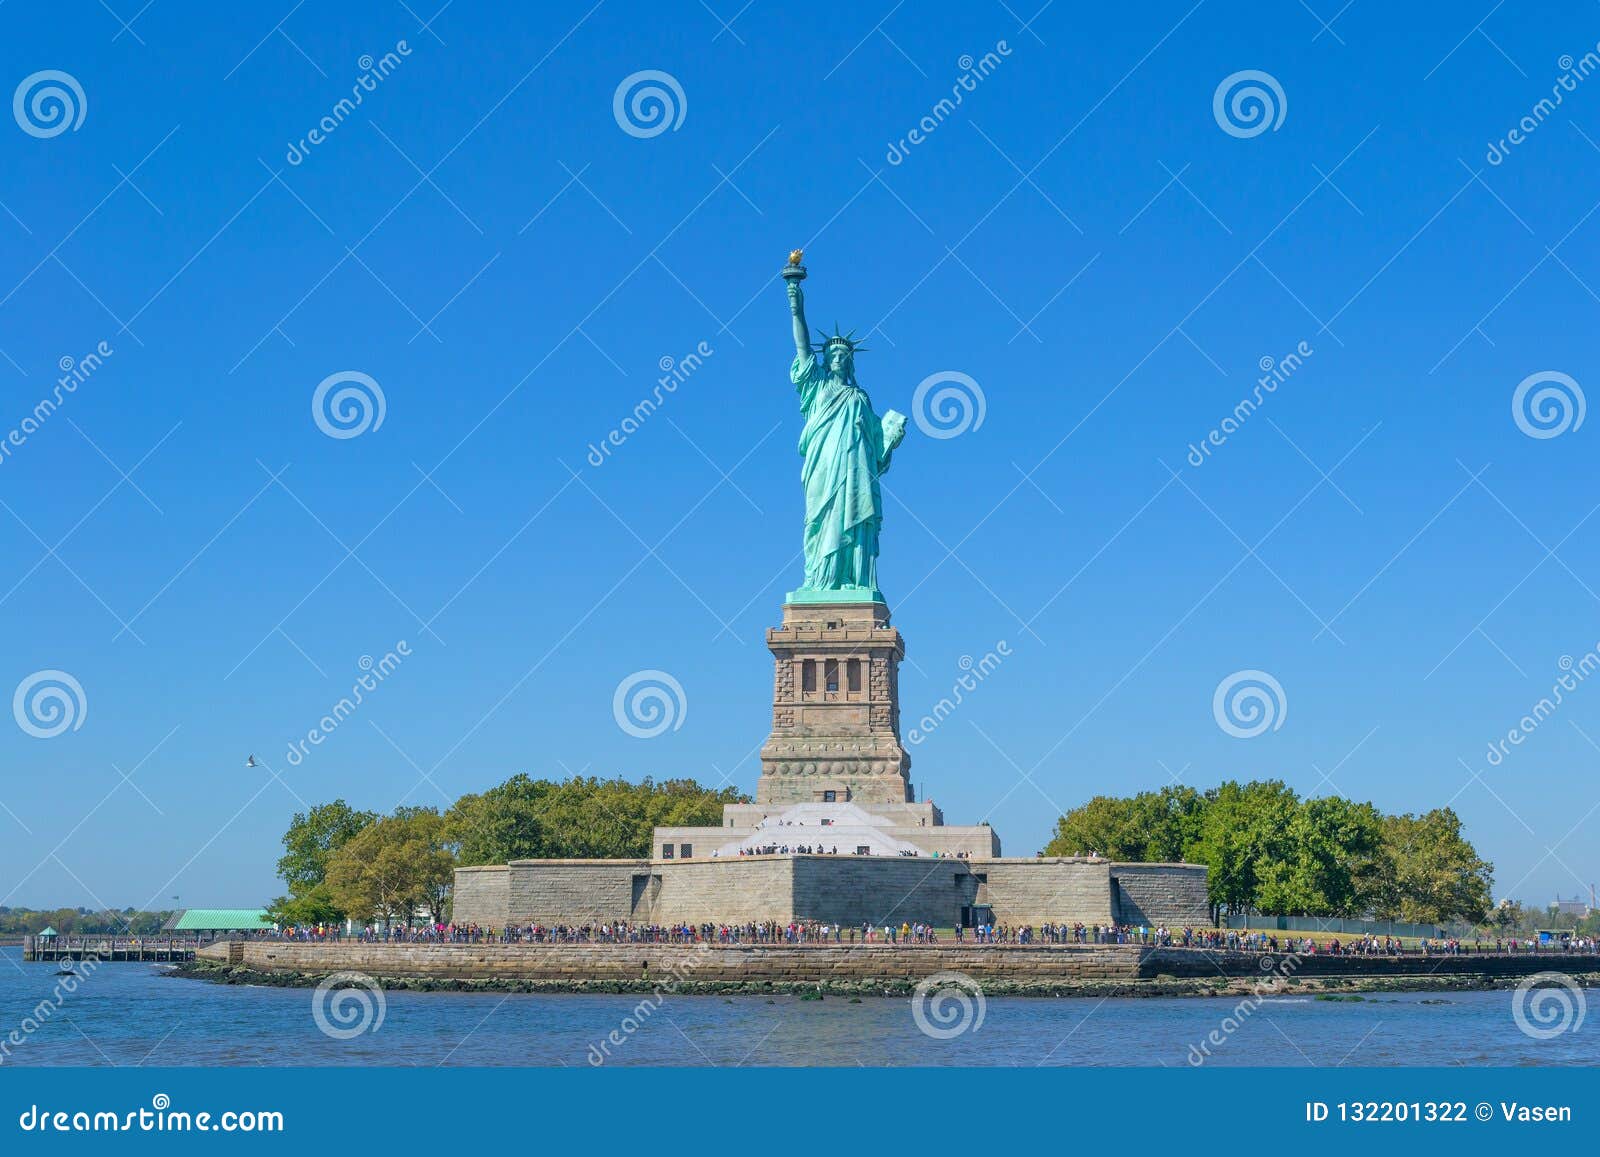 statue of liberty - liberty island, new york. usa